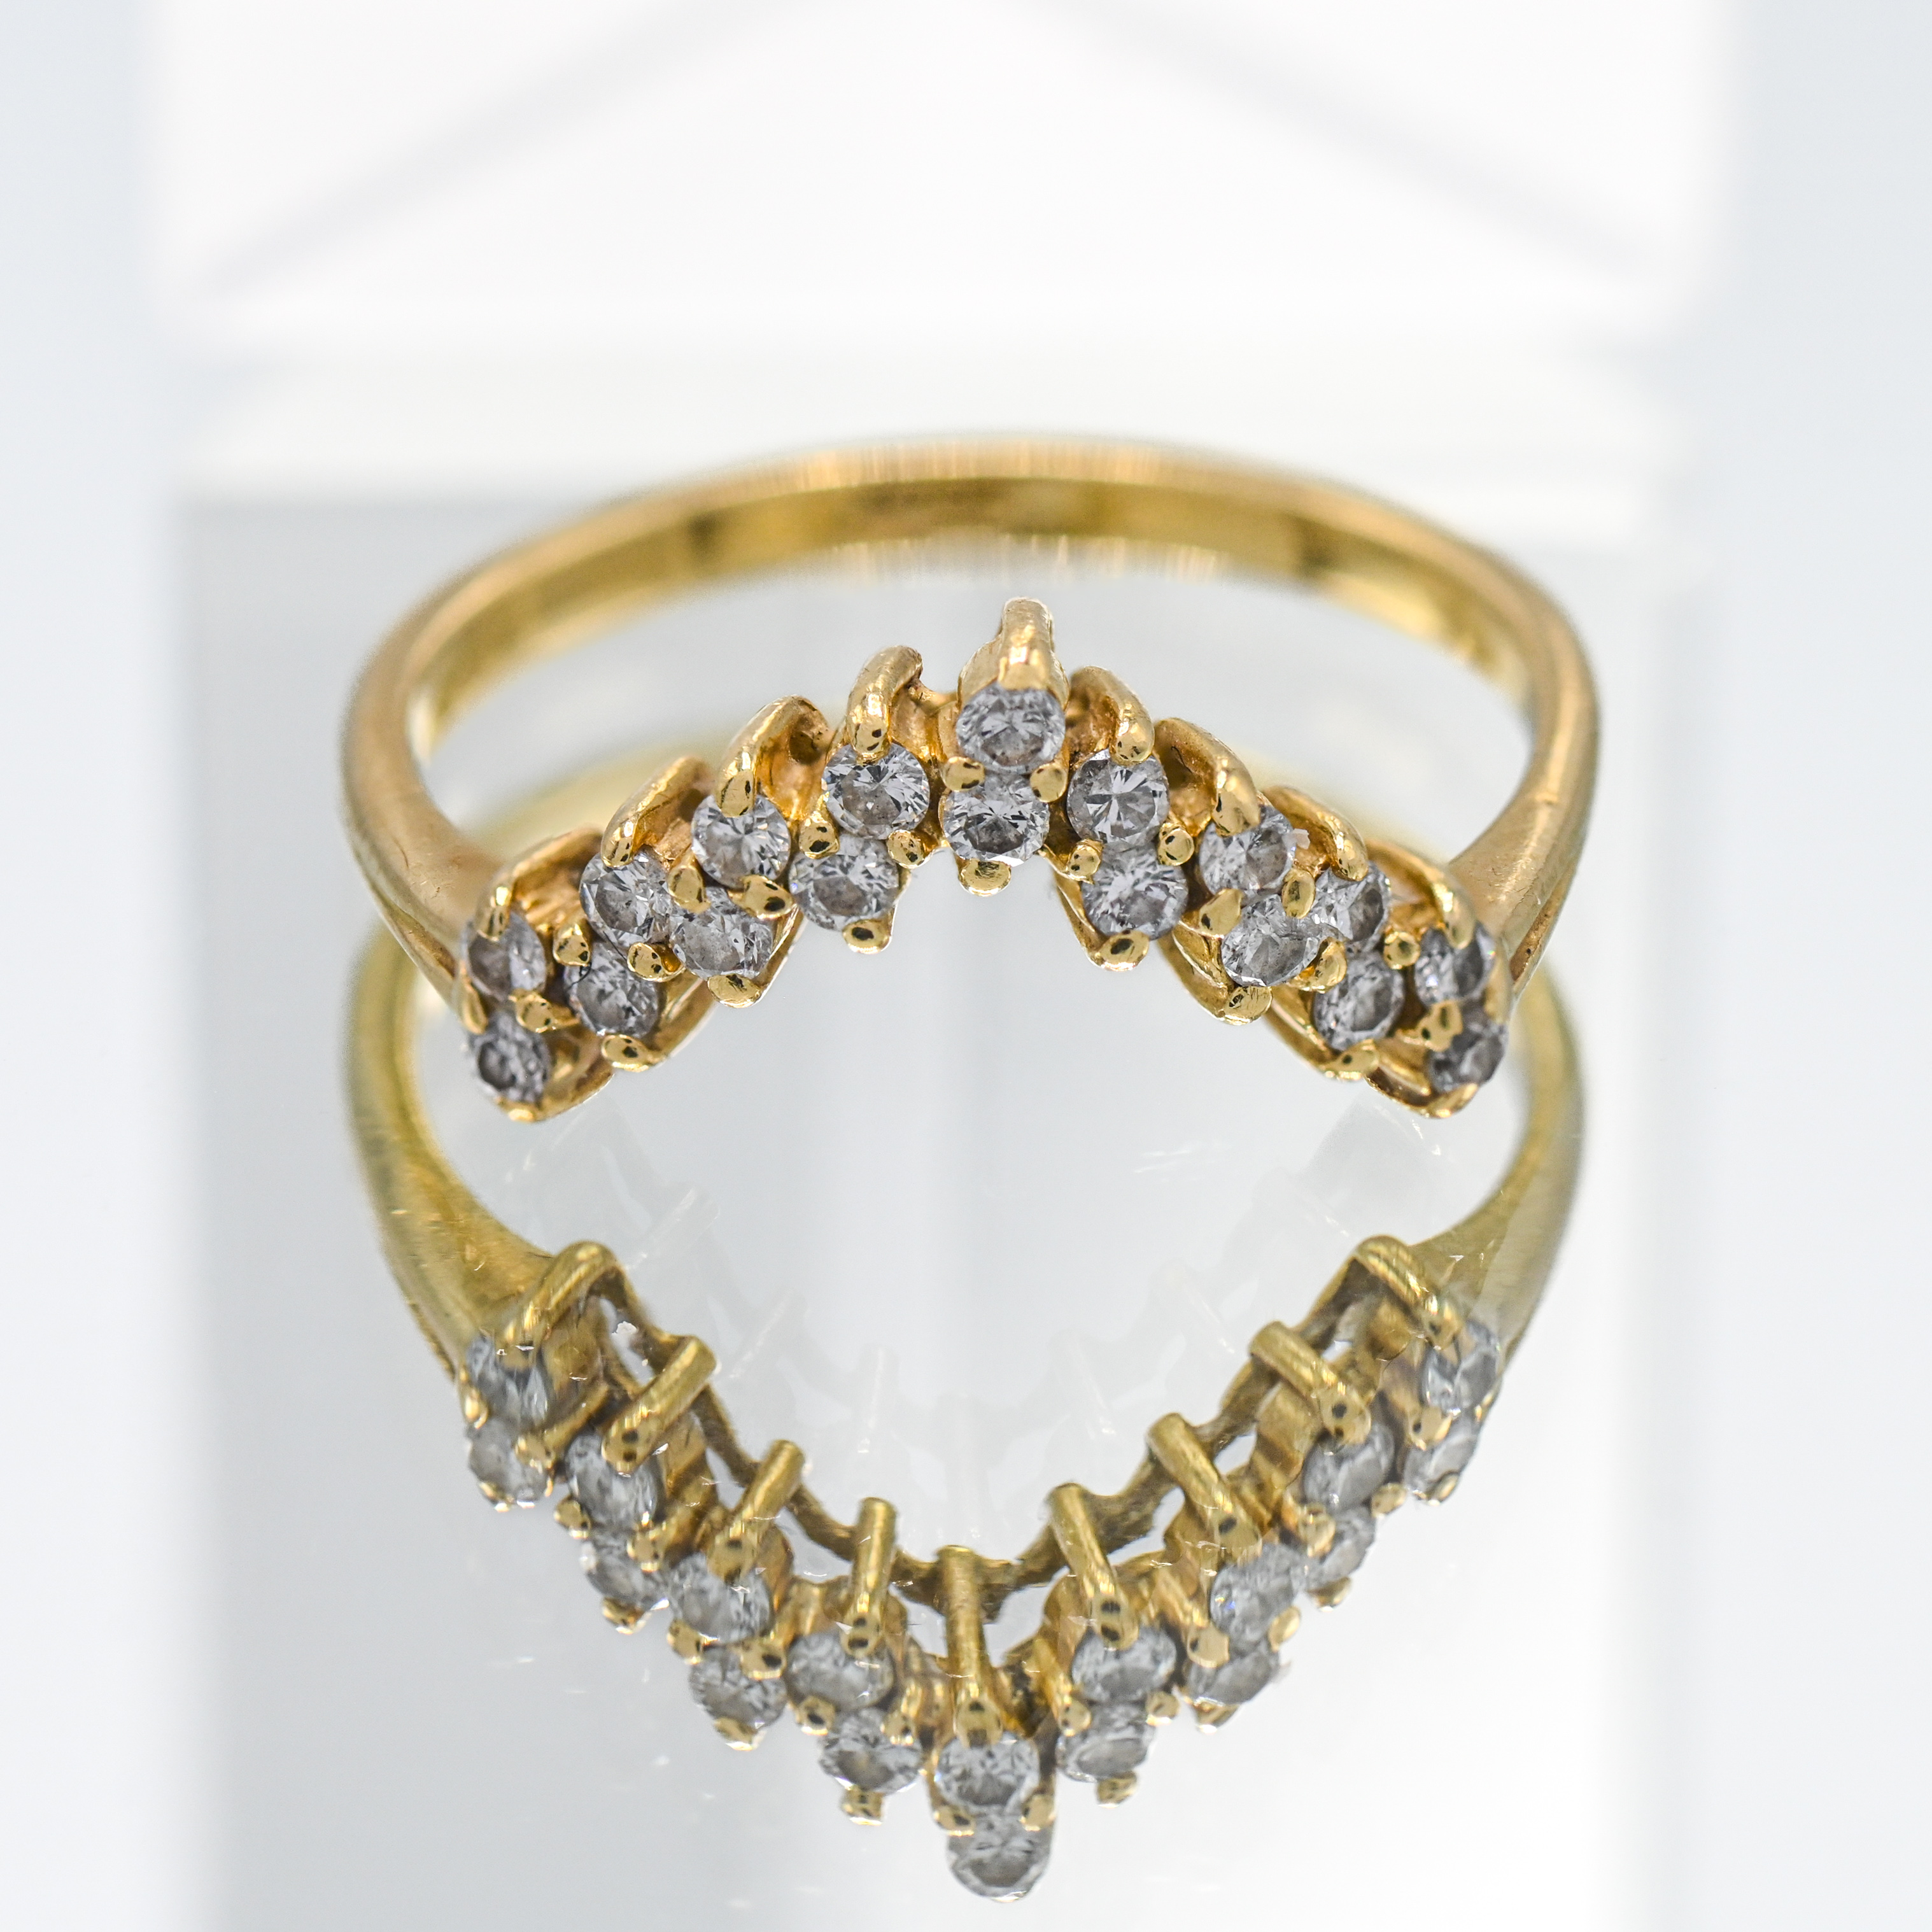 An 18ct yellow gold diamond set wishbone ring, size U, total weight approx. 4.0g.